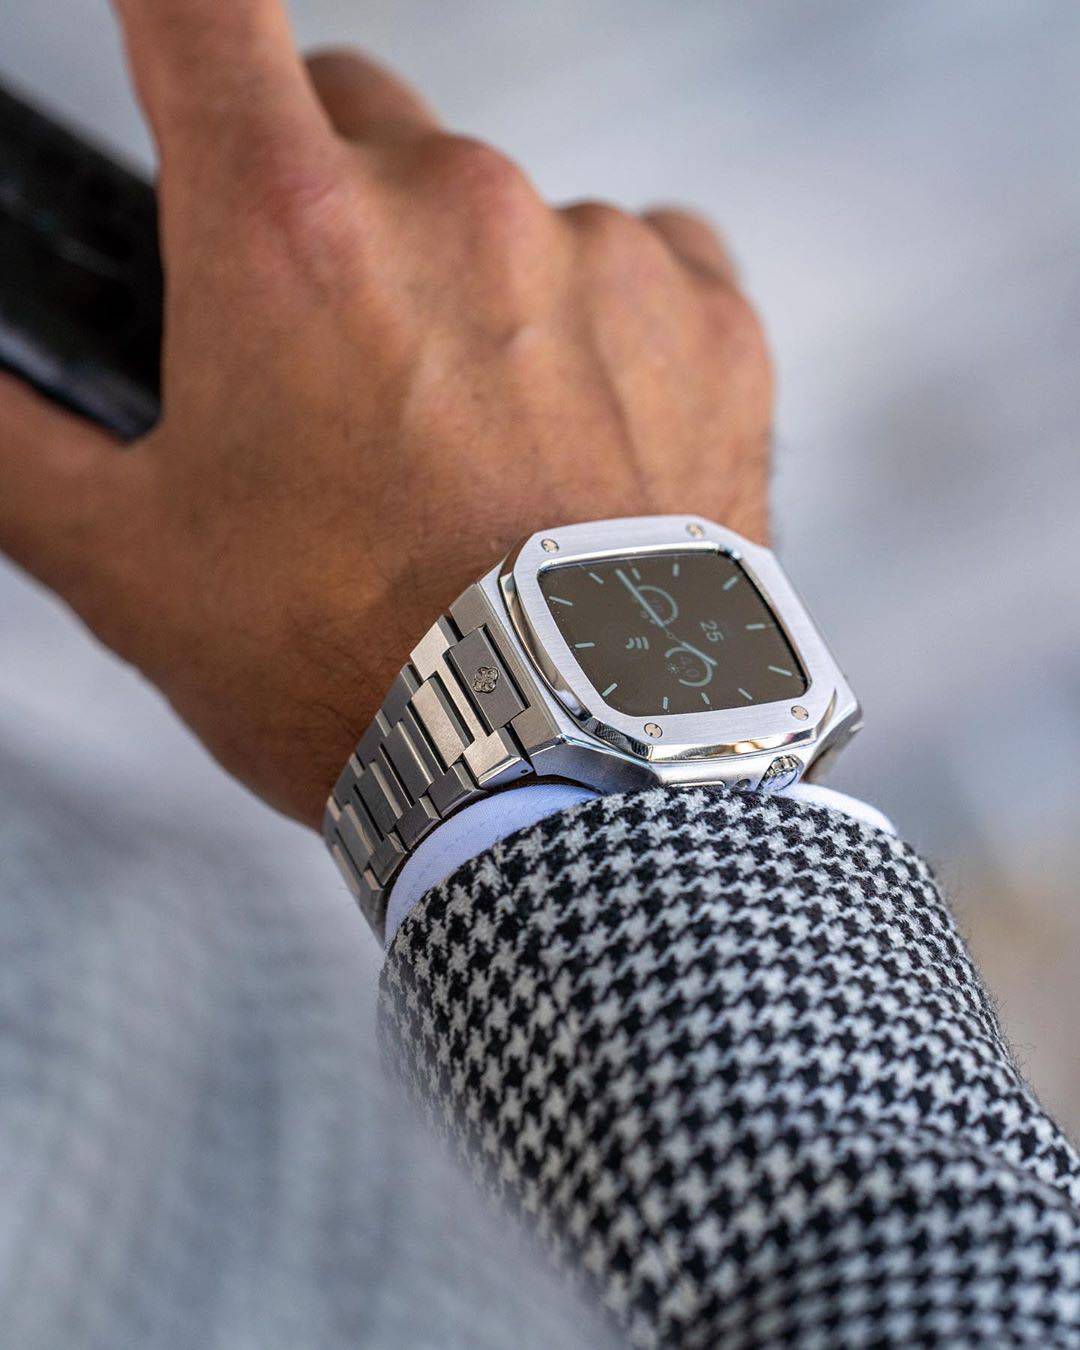 MyMag - Dì addio al fragile Apple Watch, Apple potrebbe lanciare una versione outdoor dell’orologio